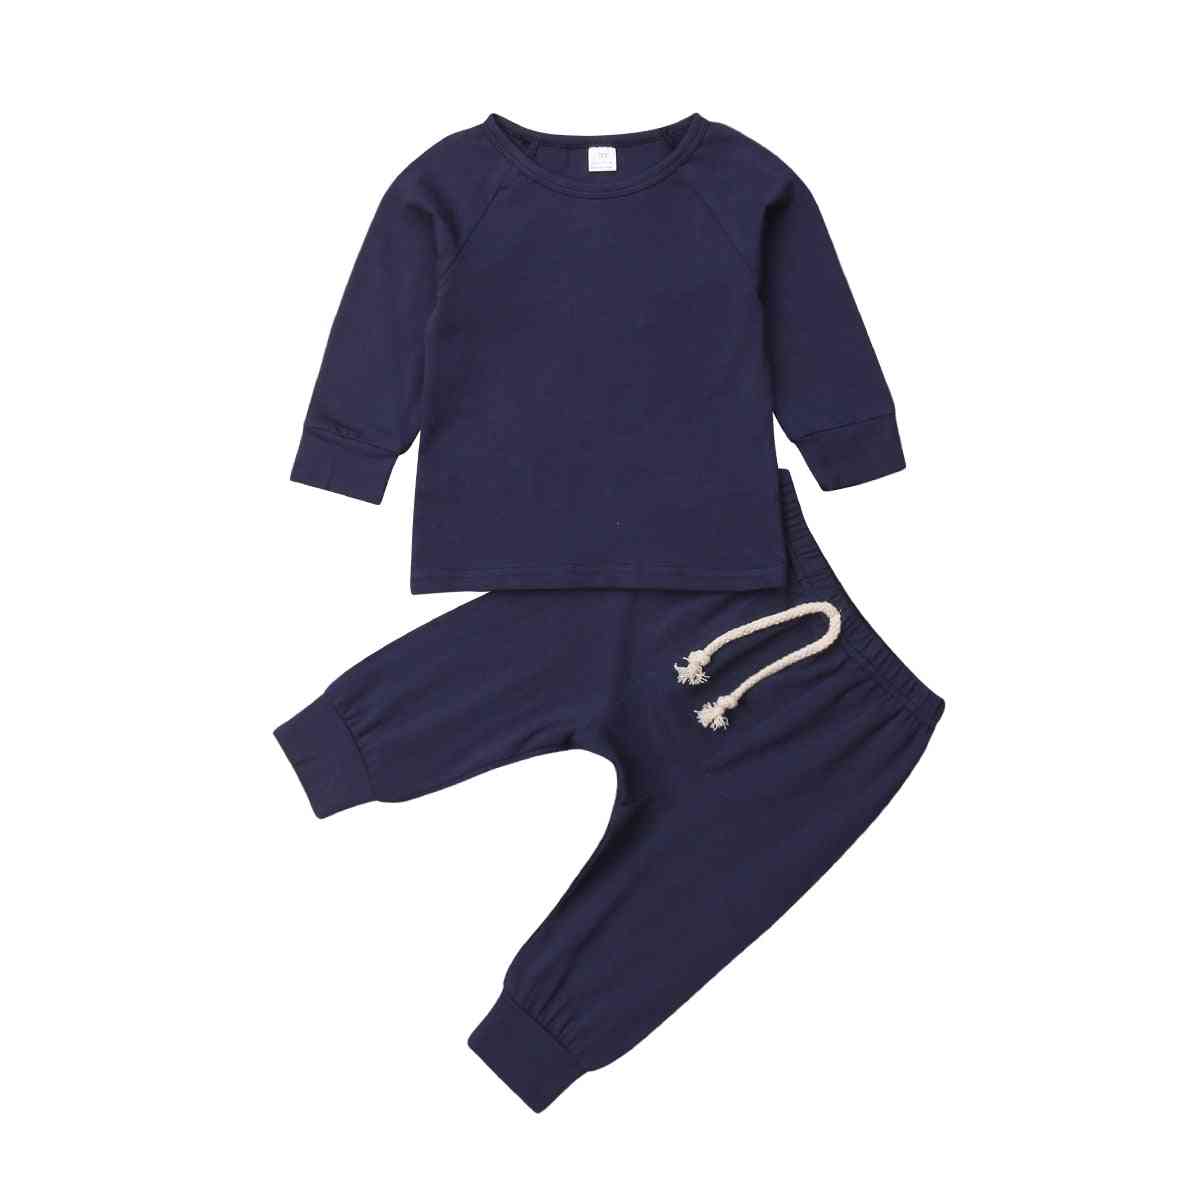 Baby Sleepwear Newborn Toddler Boy / Girl  Pajamas Set - Outfit Home Wear